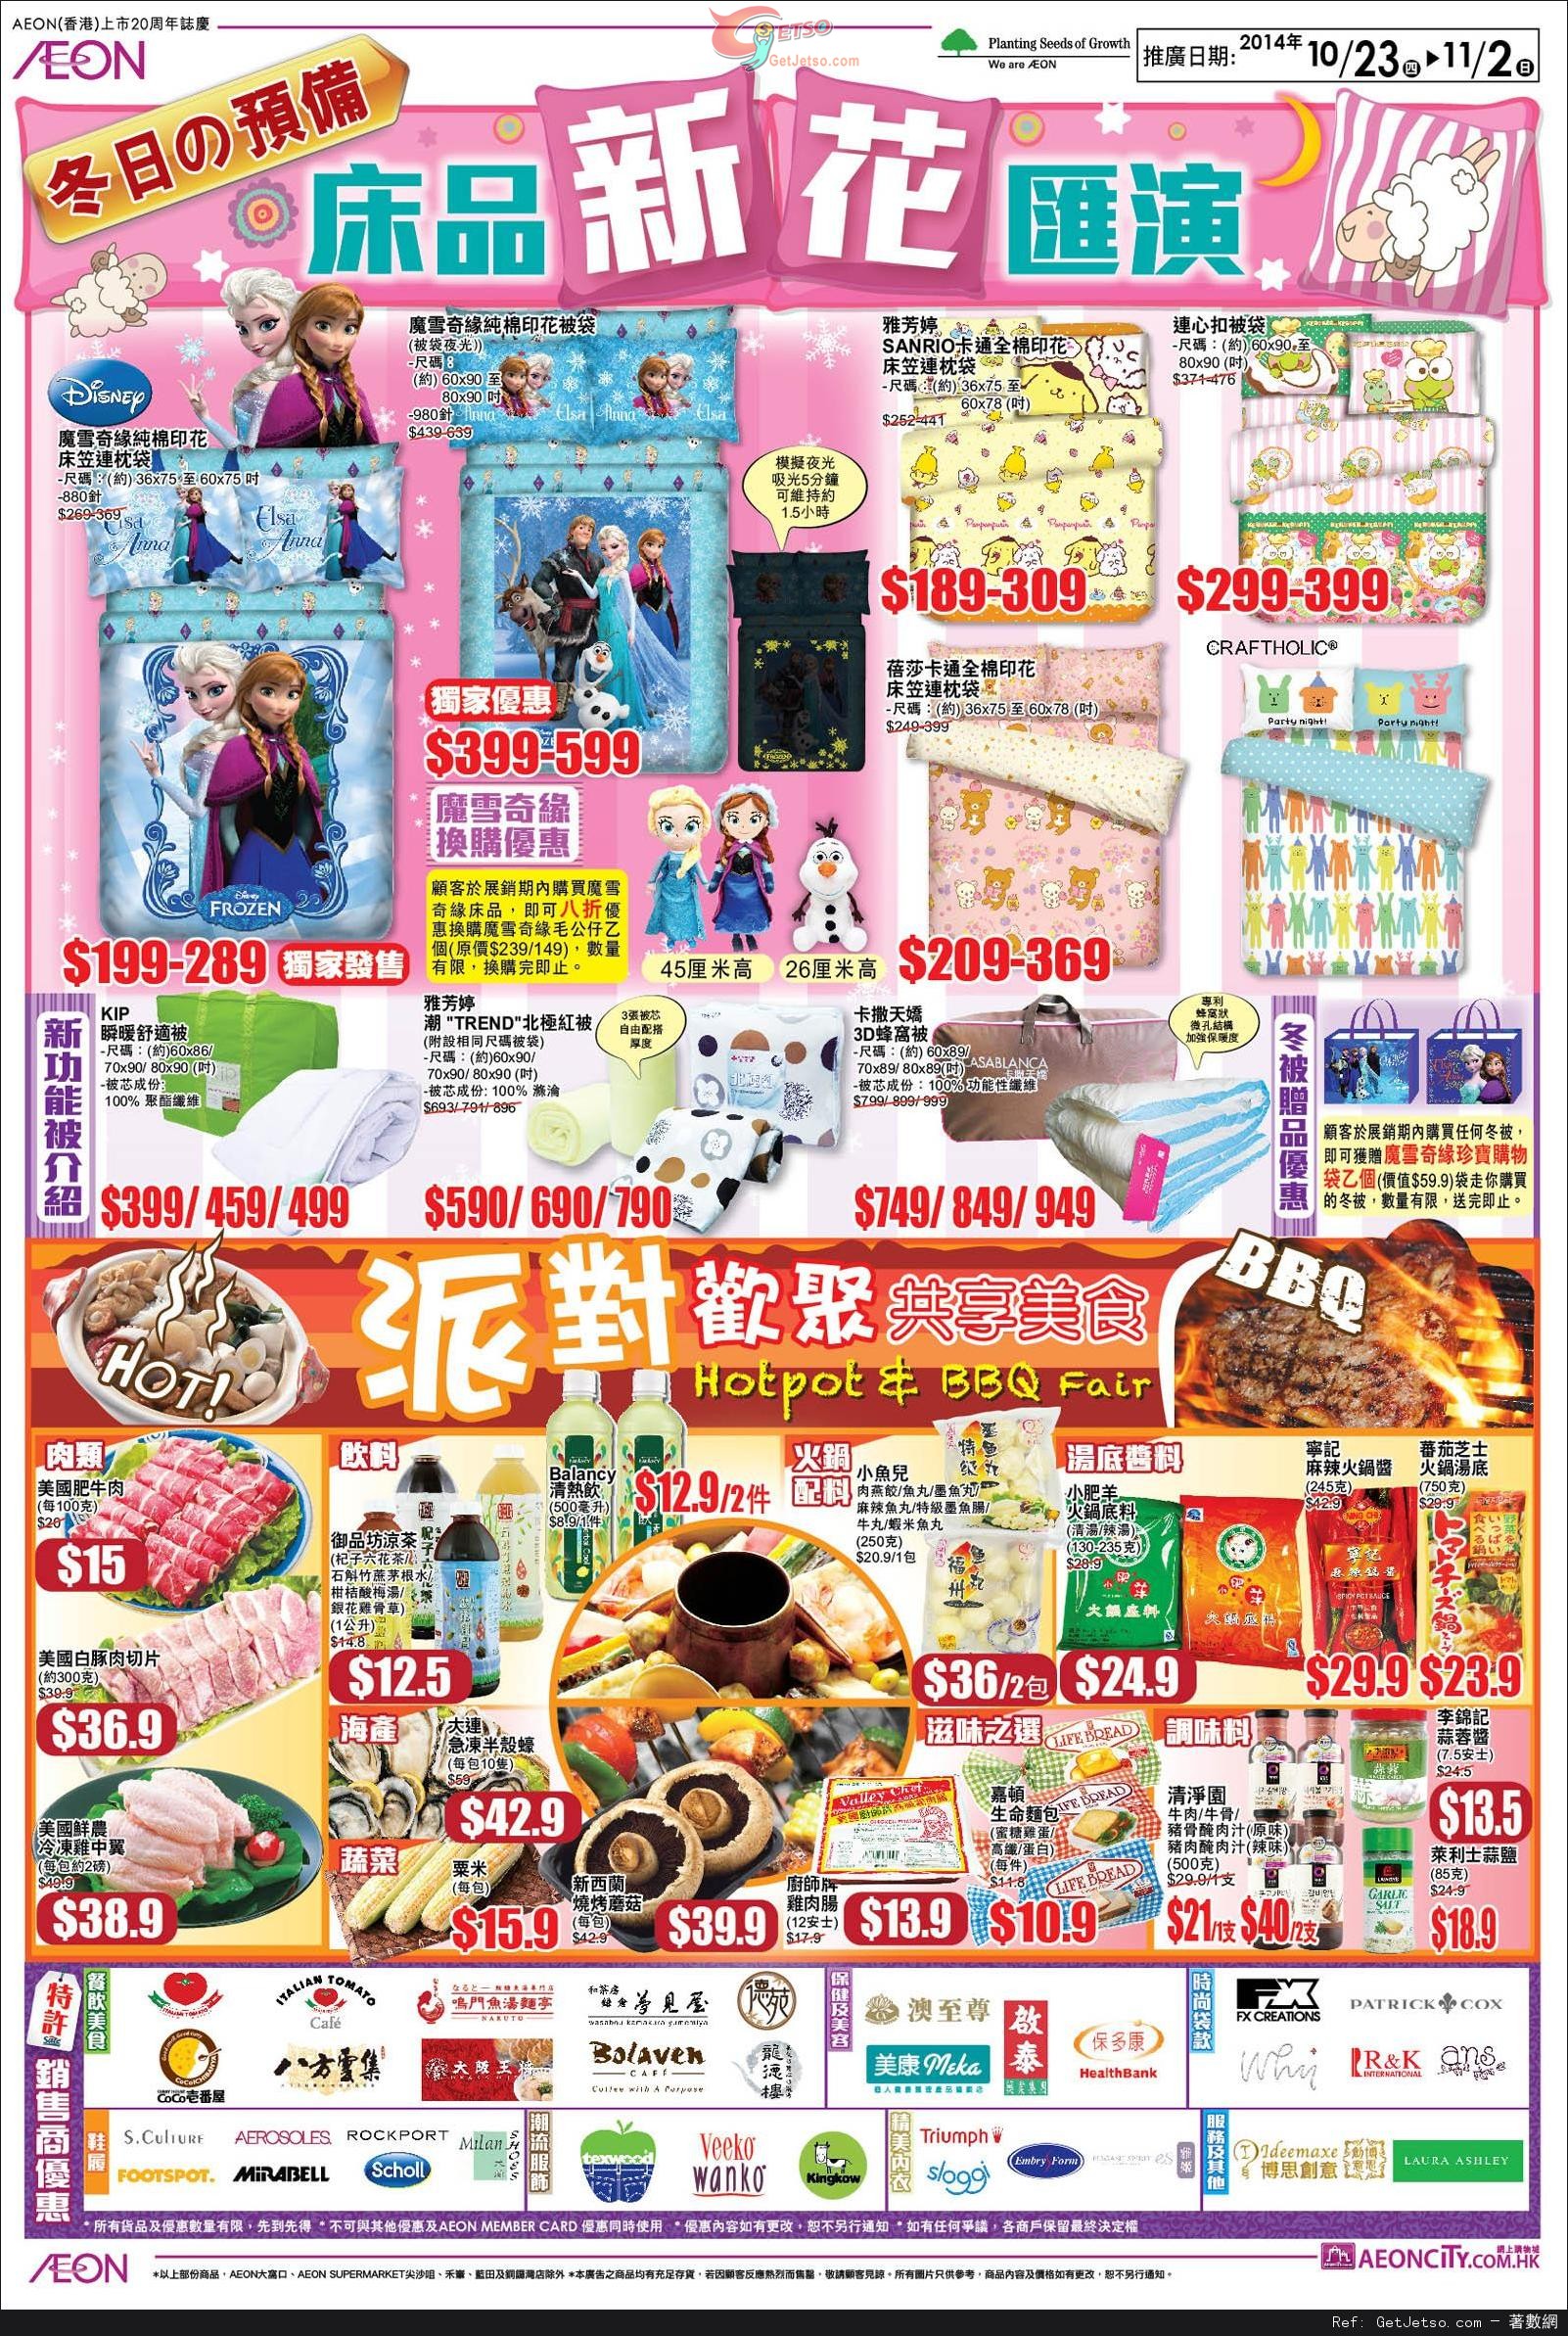 AEON 上市20週年誌慶-第2浪購物優惠(至14年11月2日)圖片2